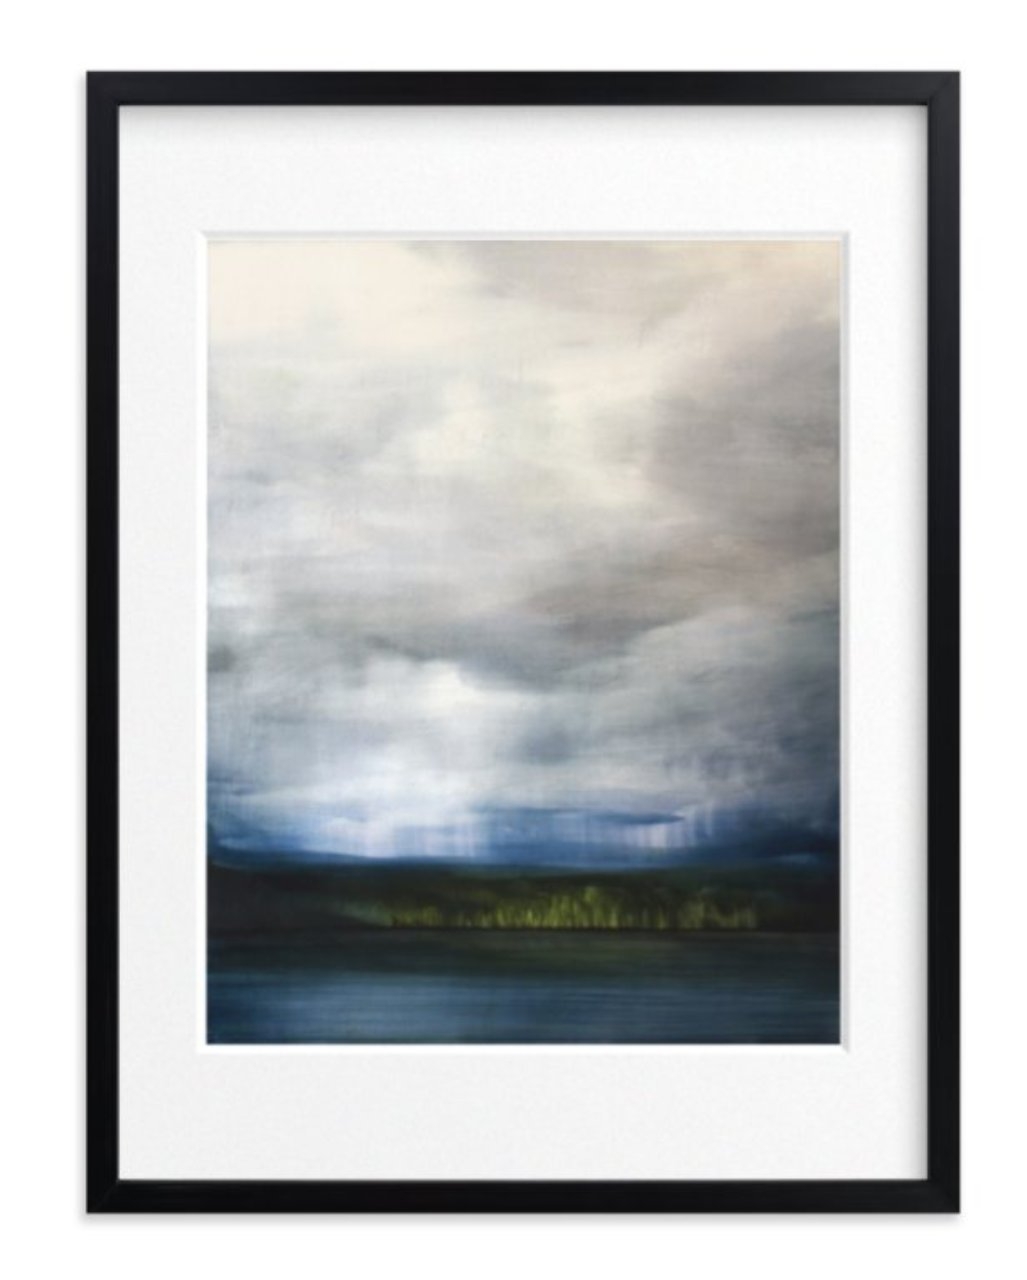 Rain and Light Framed Print - 18x24, Black Frame, Matted - Image 0